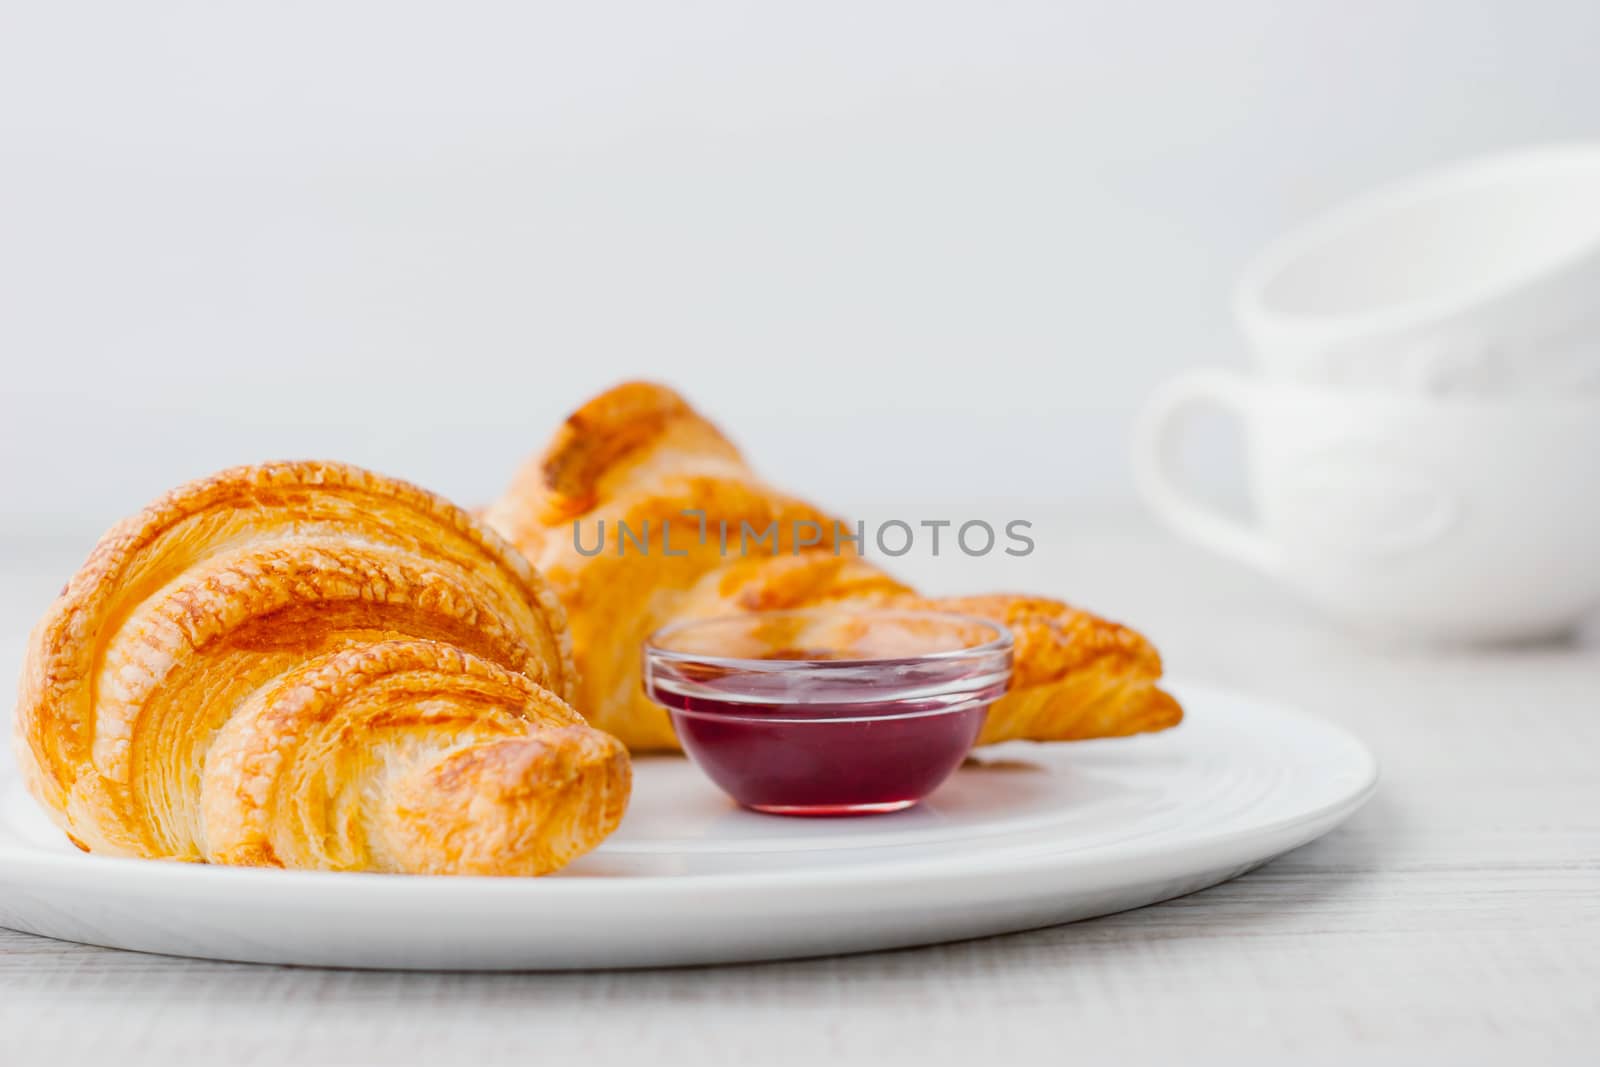 Croissants with berry jam by Deniskarpenkov